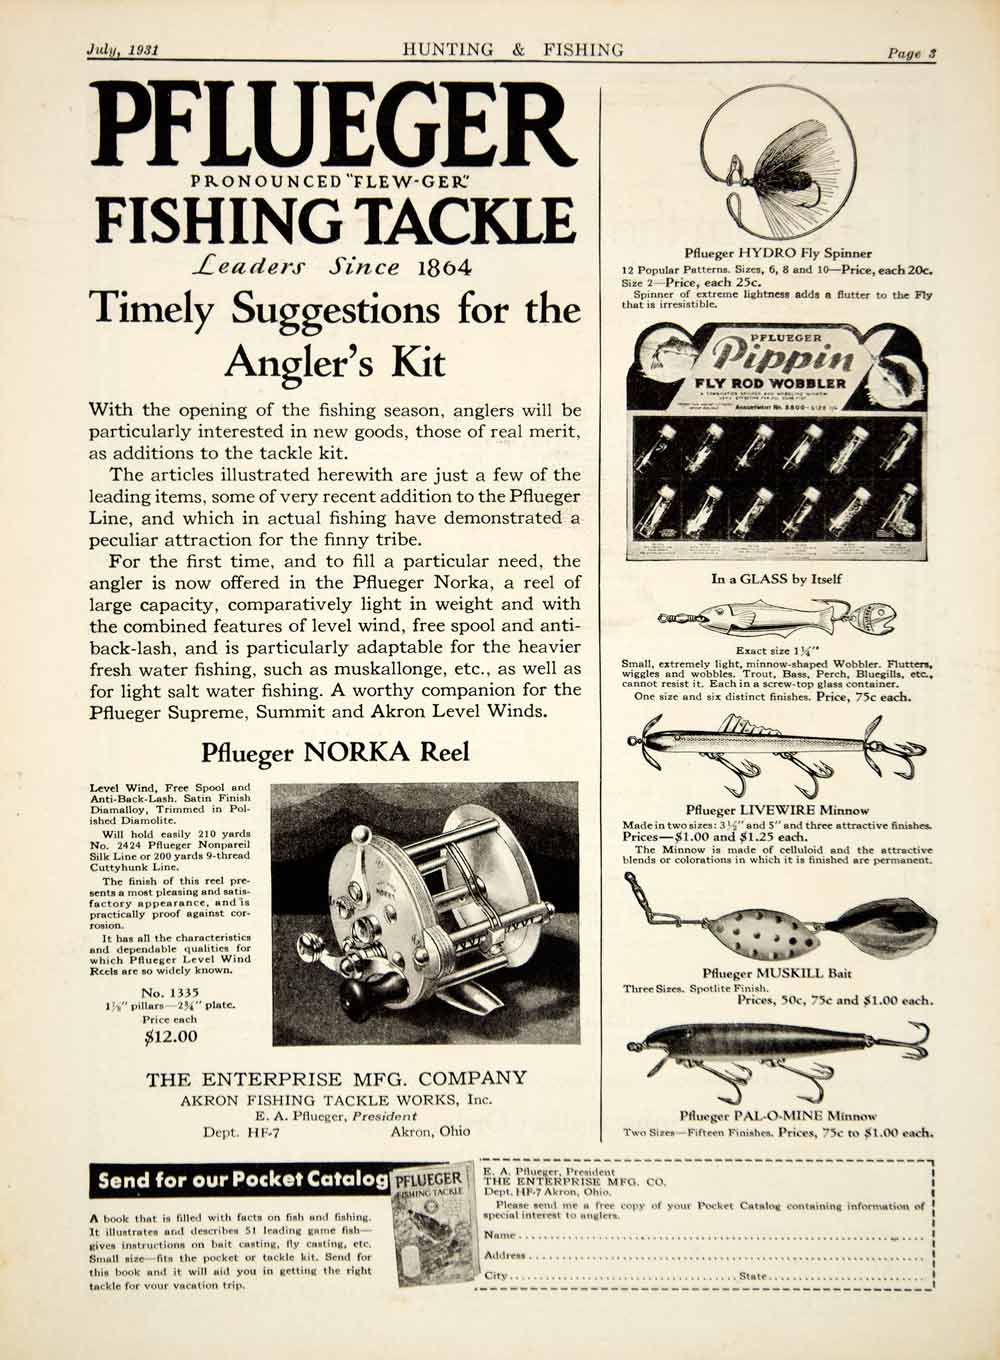 Fishing Lures Poster – Ellicott & Co.